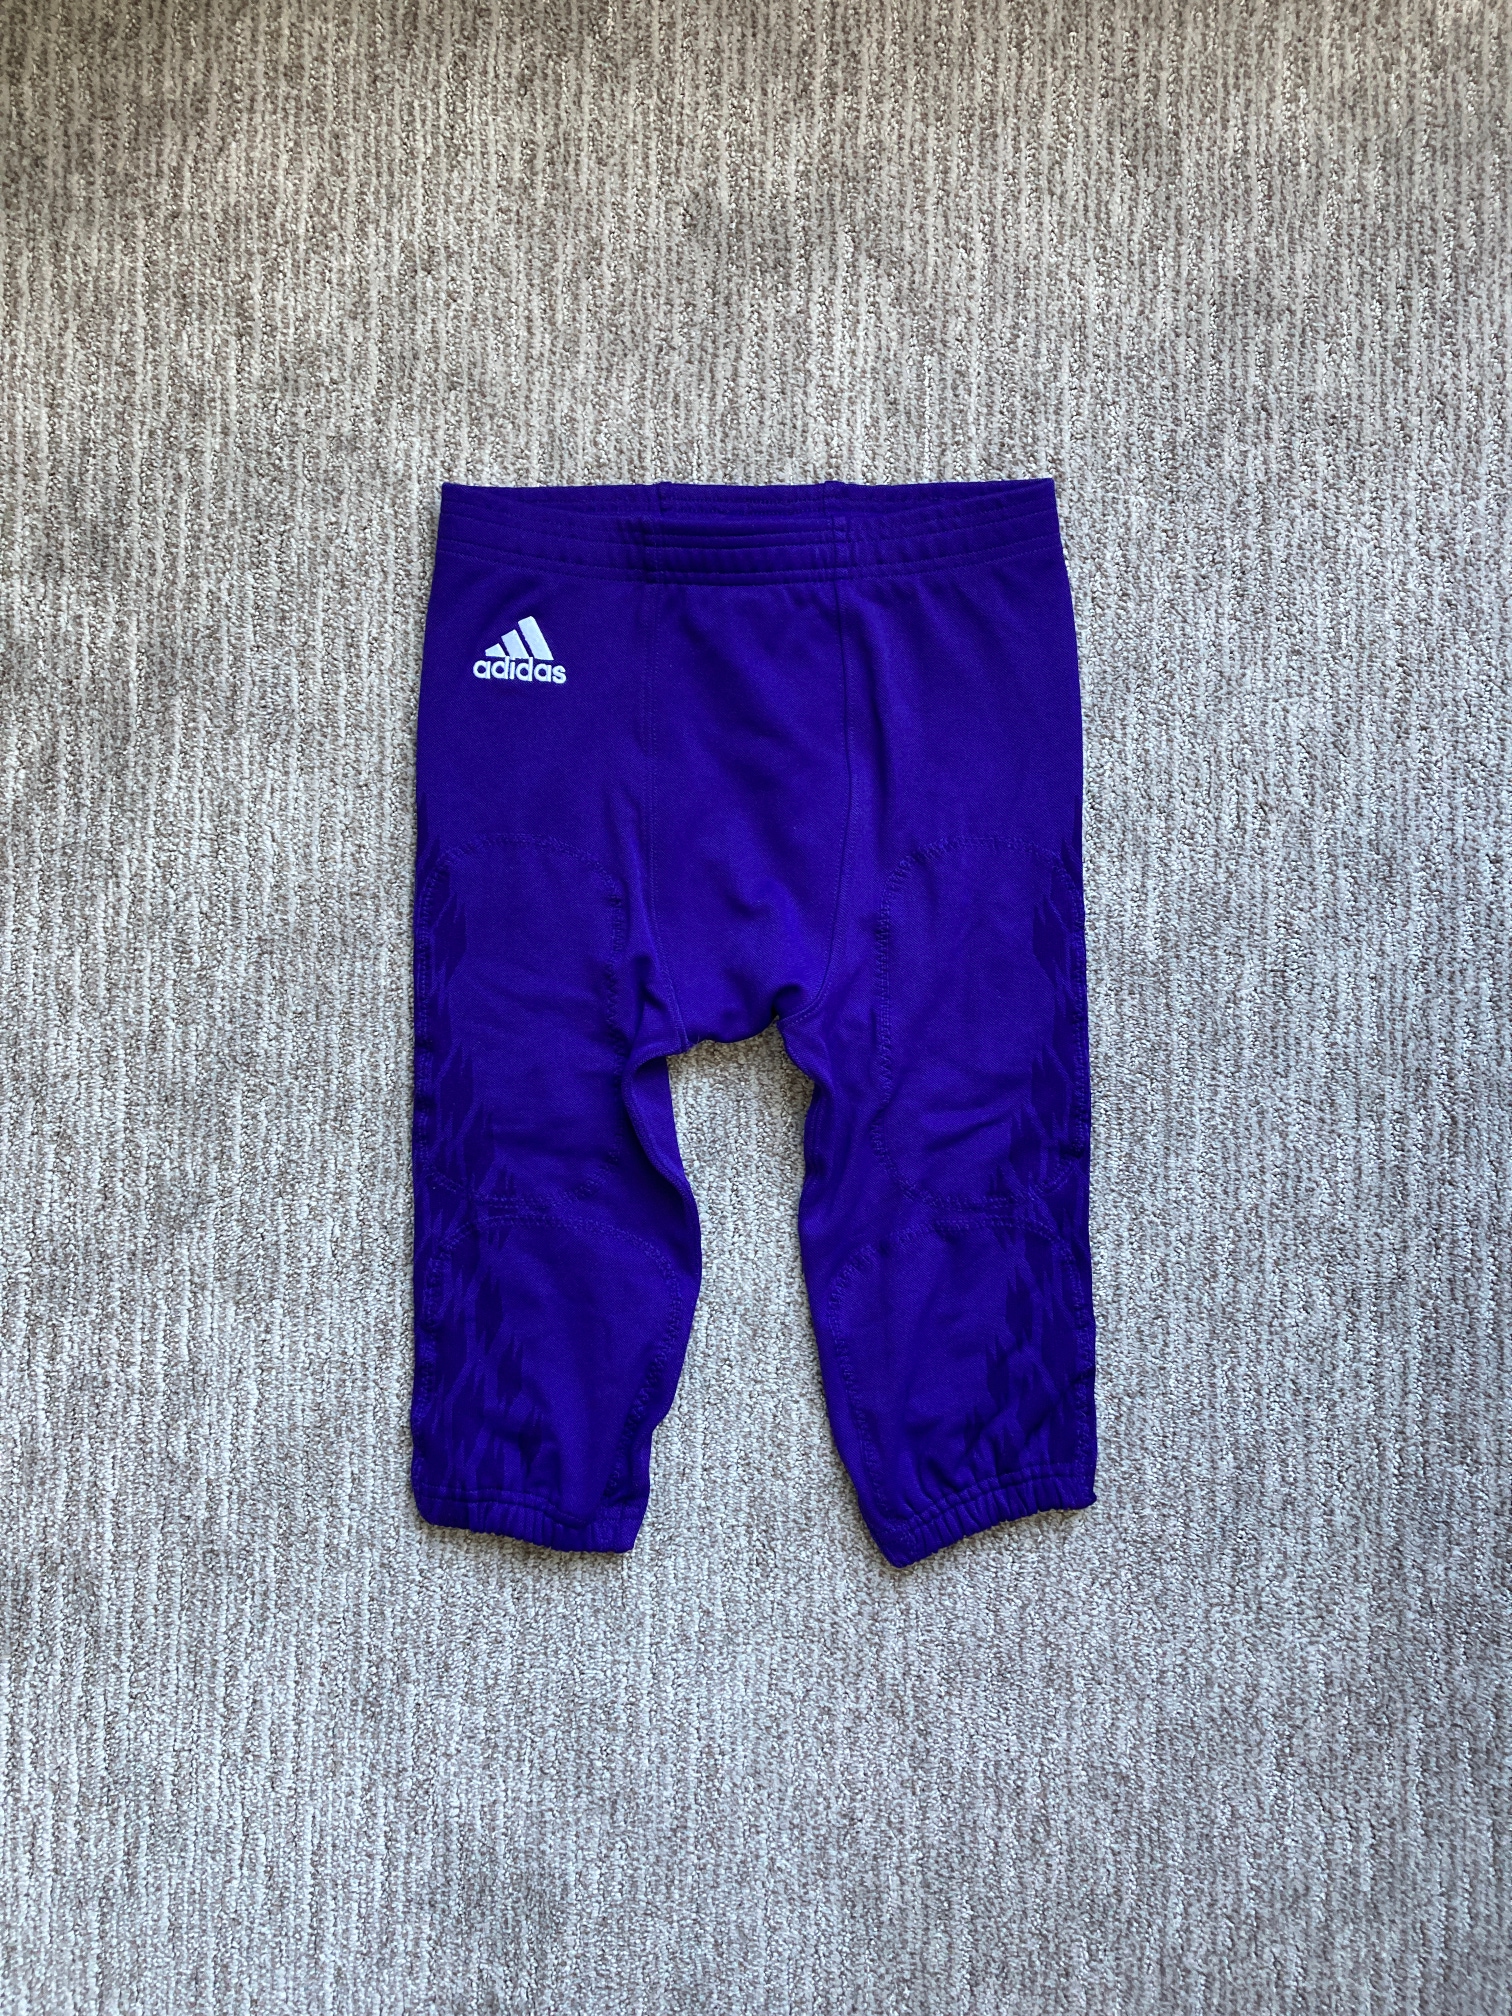 Men's Medium Adidas Primeknit Football Game Pants Purple